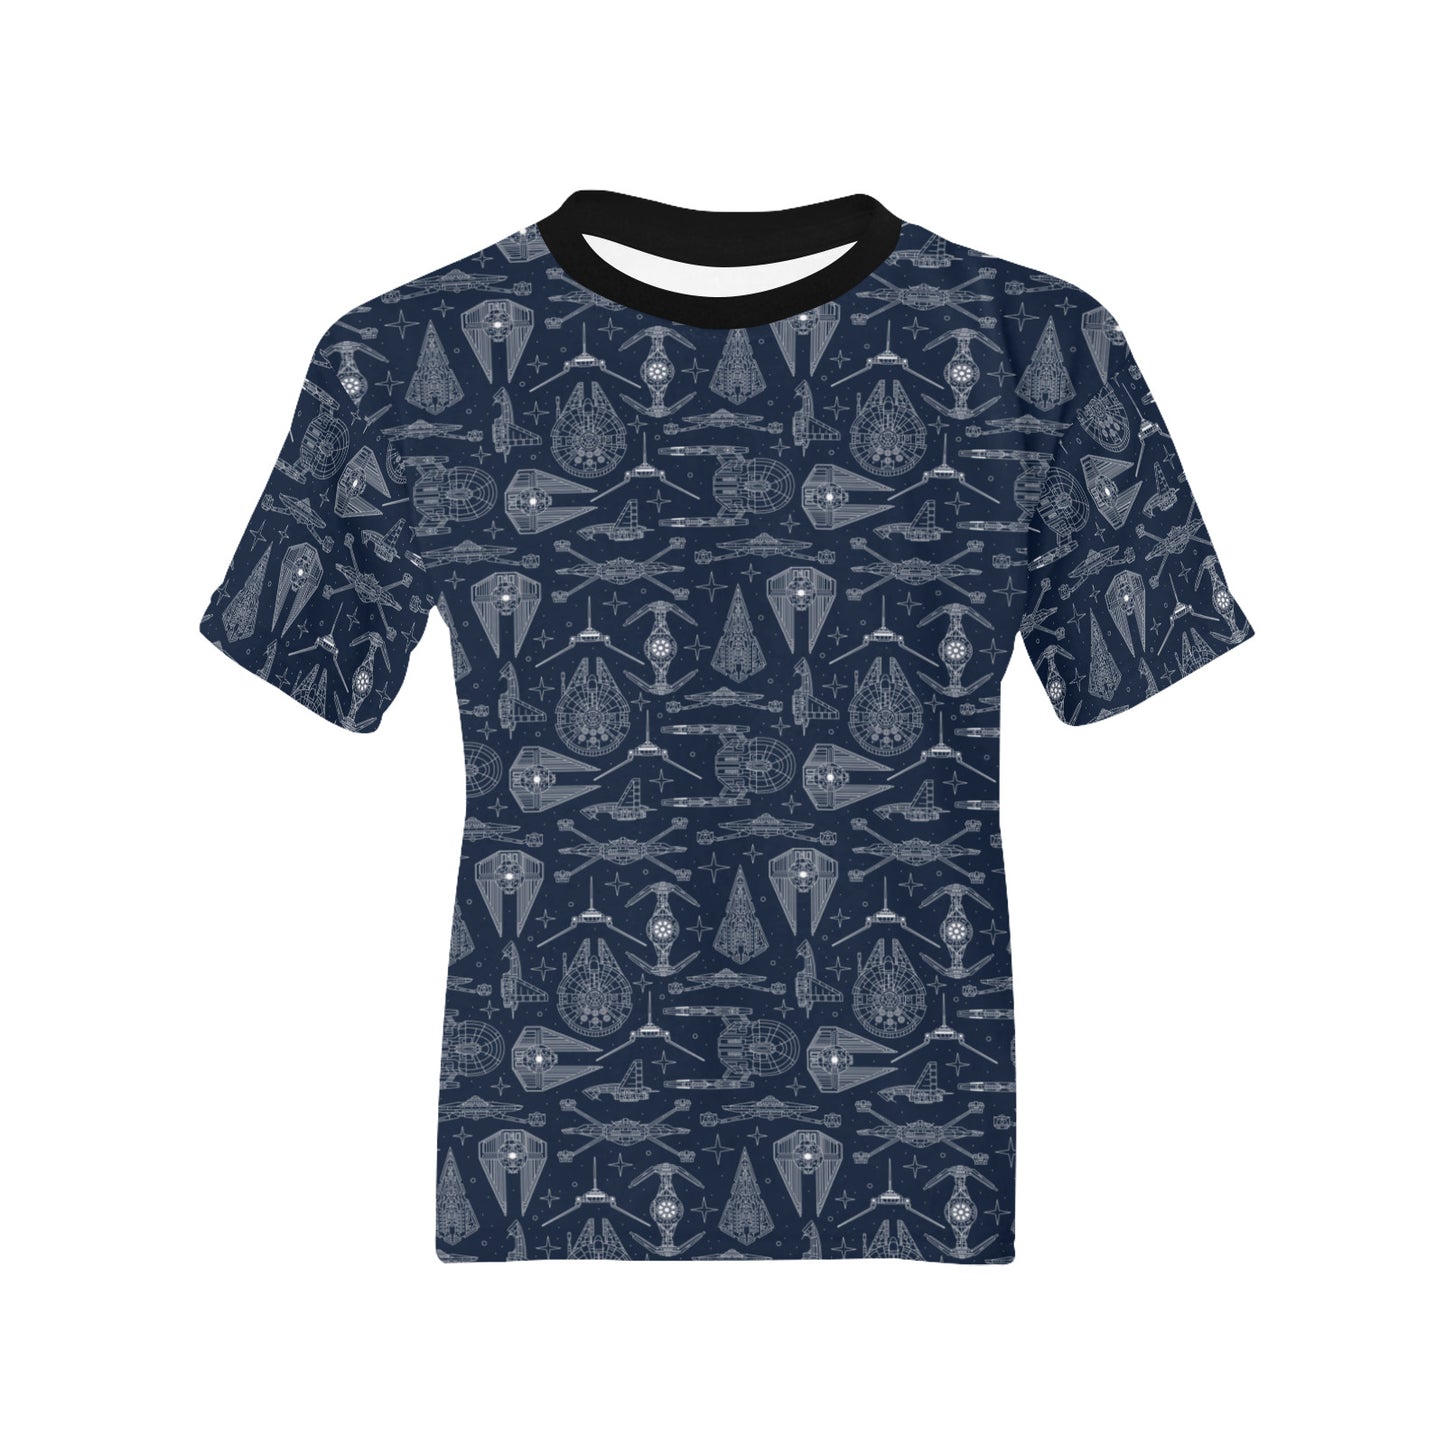 Galactic Blue Prints Kids' T-shirt